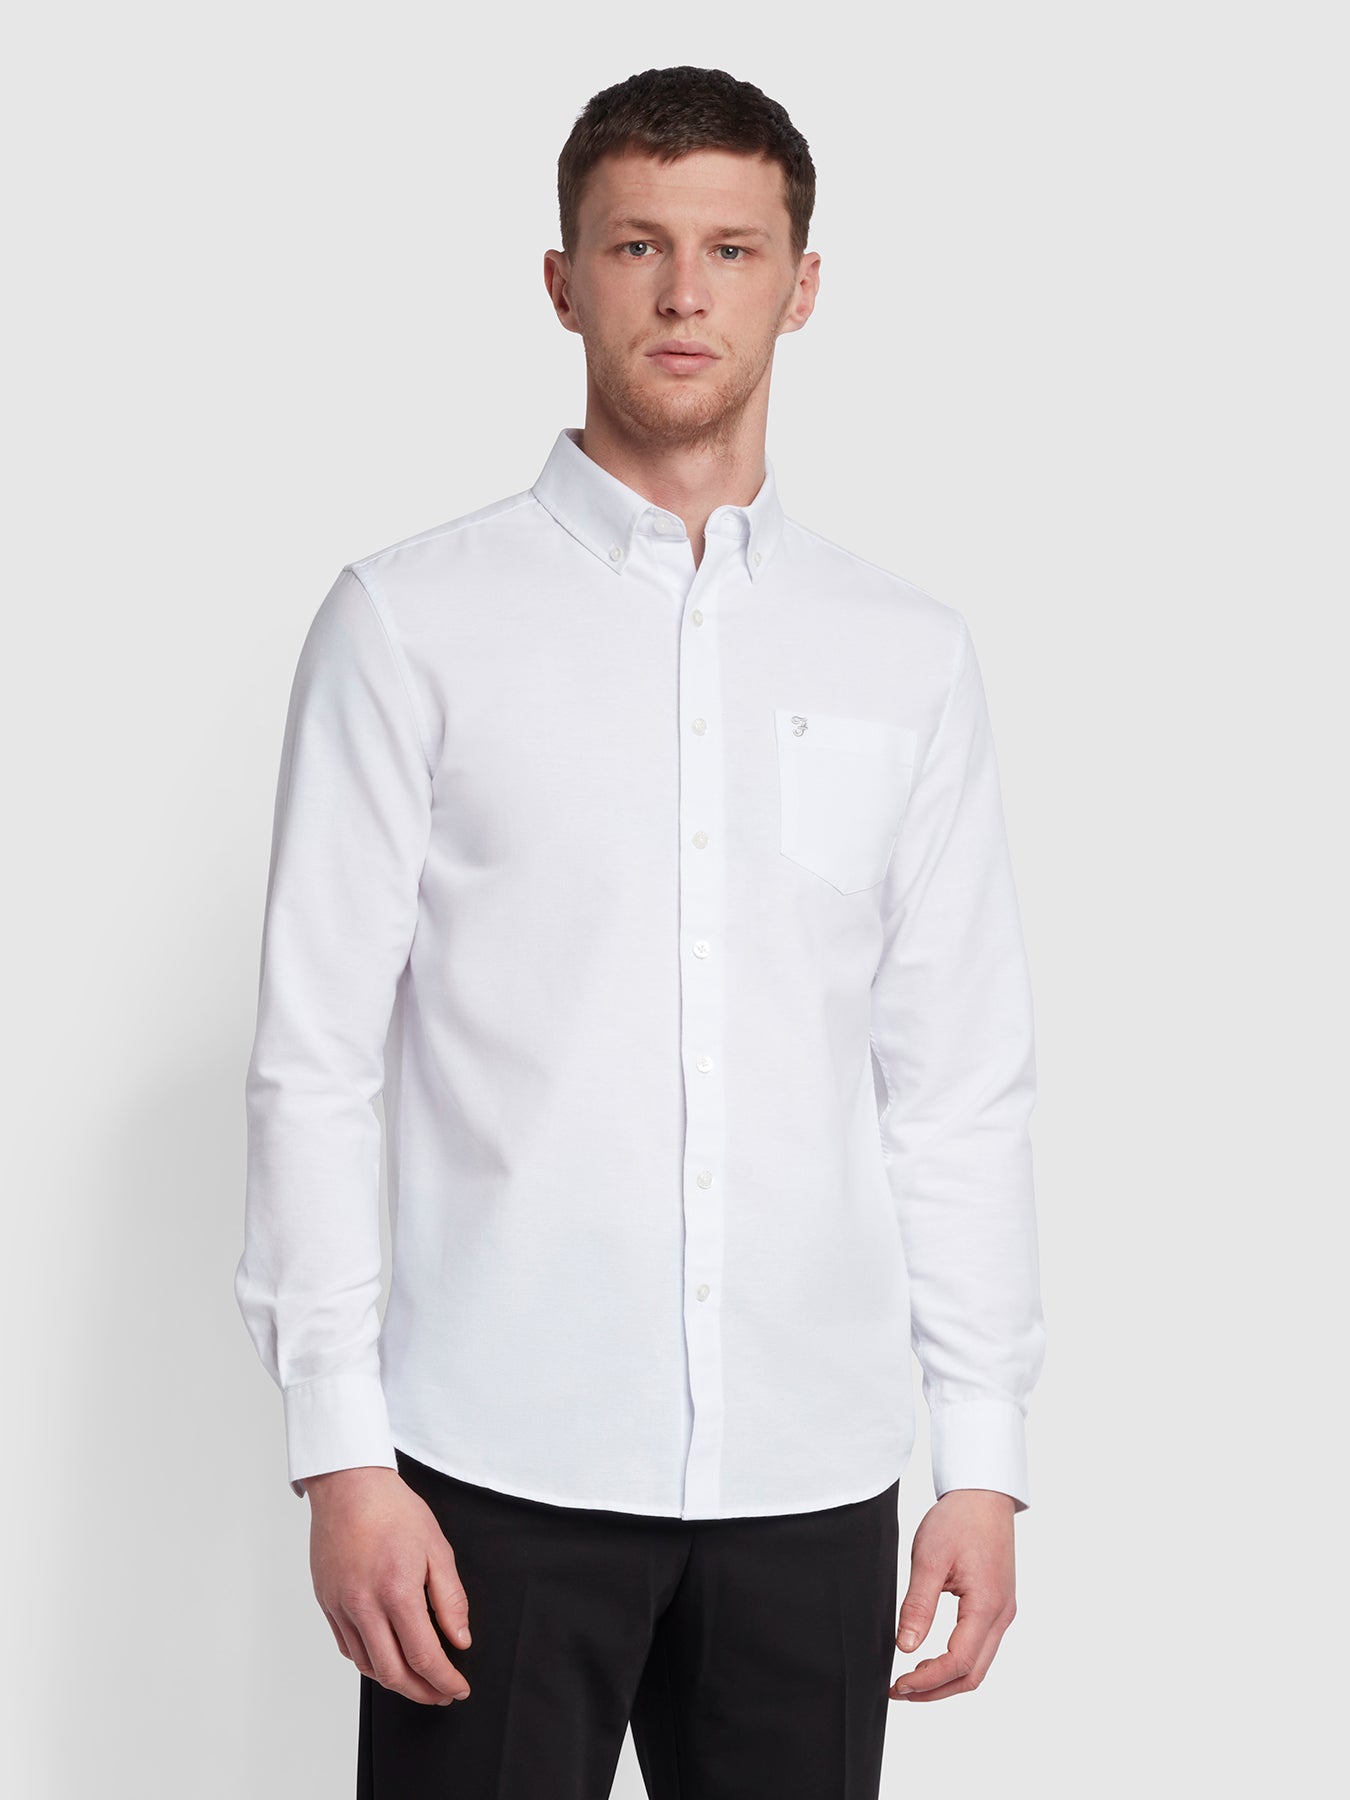 View Drayton Modern Fit Oxford Shirt In White information